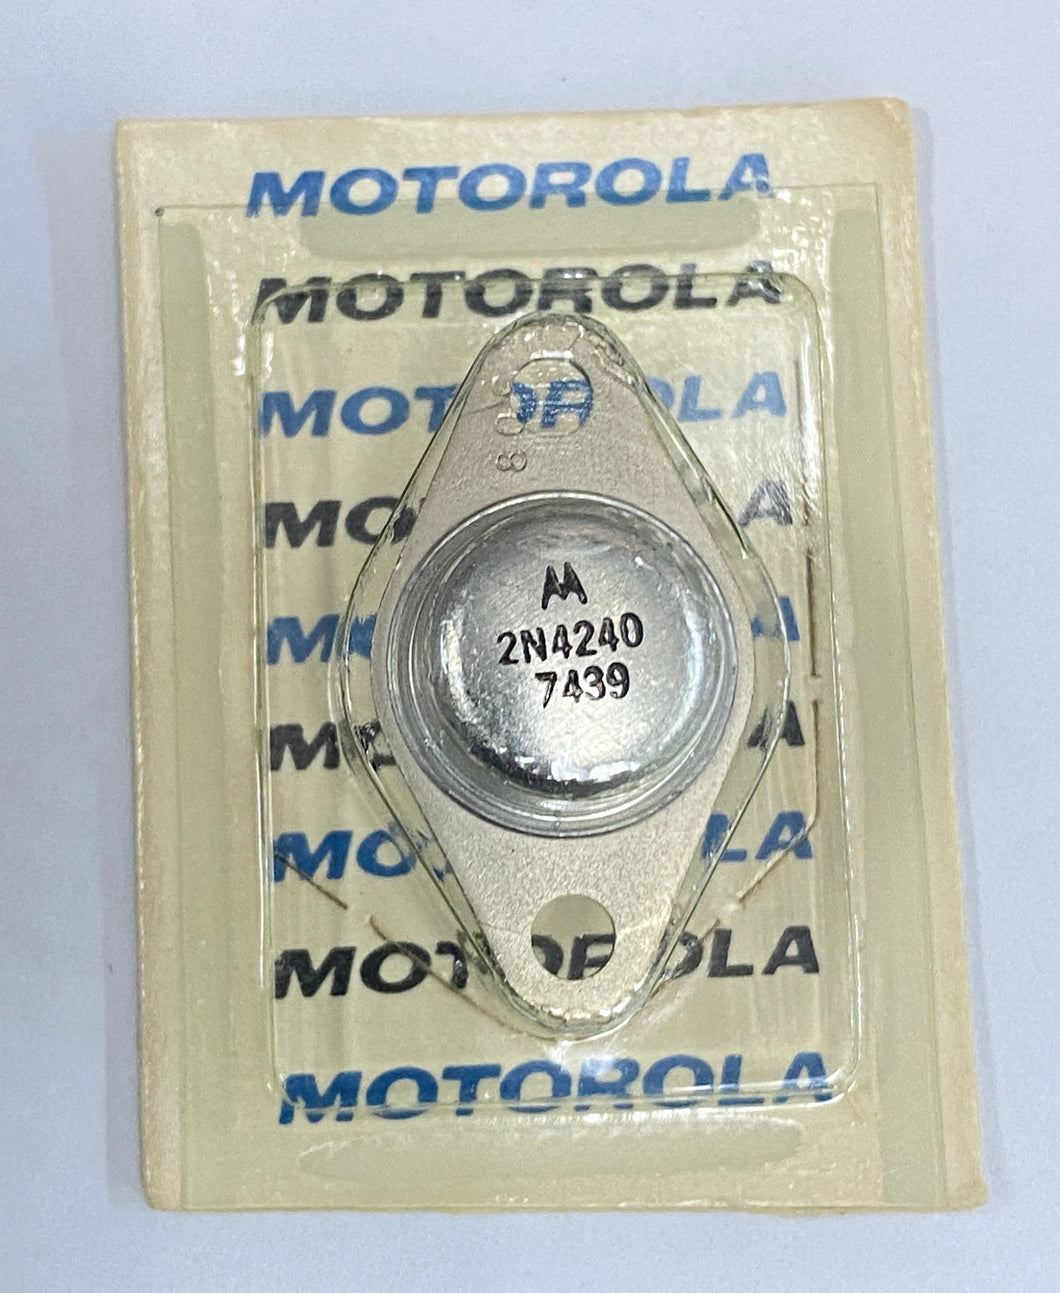 2N4240 Motorola Transistor